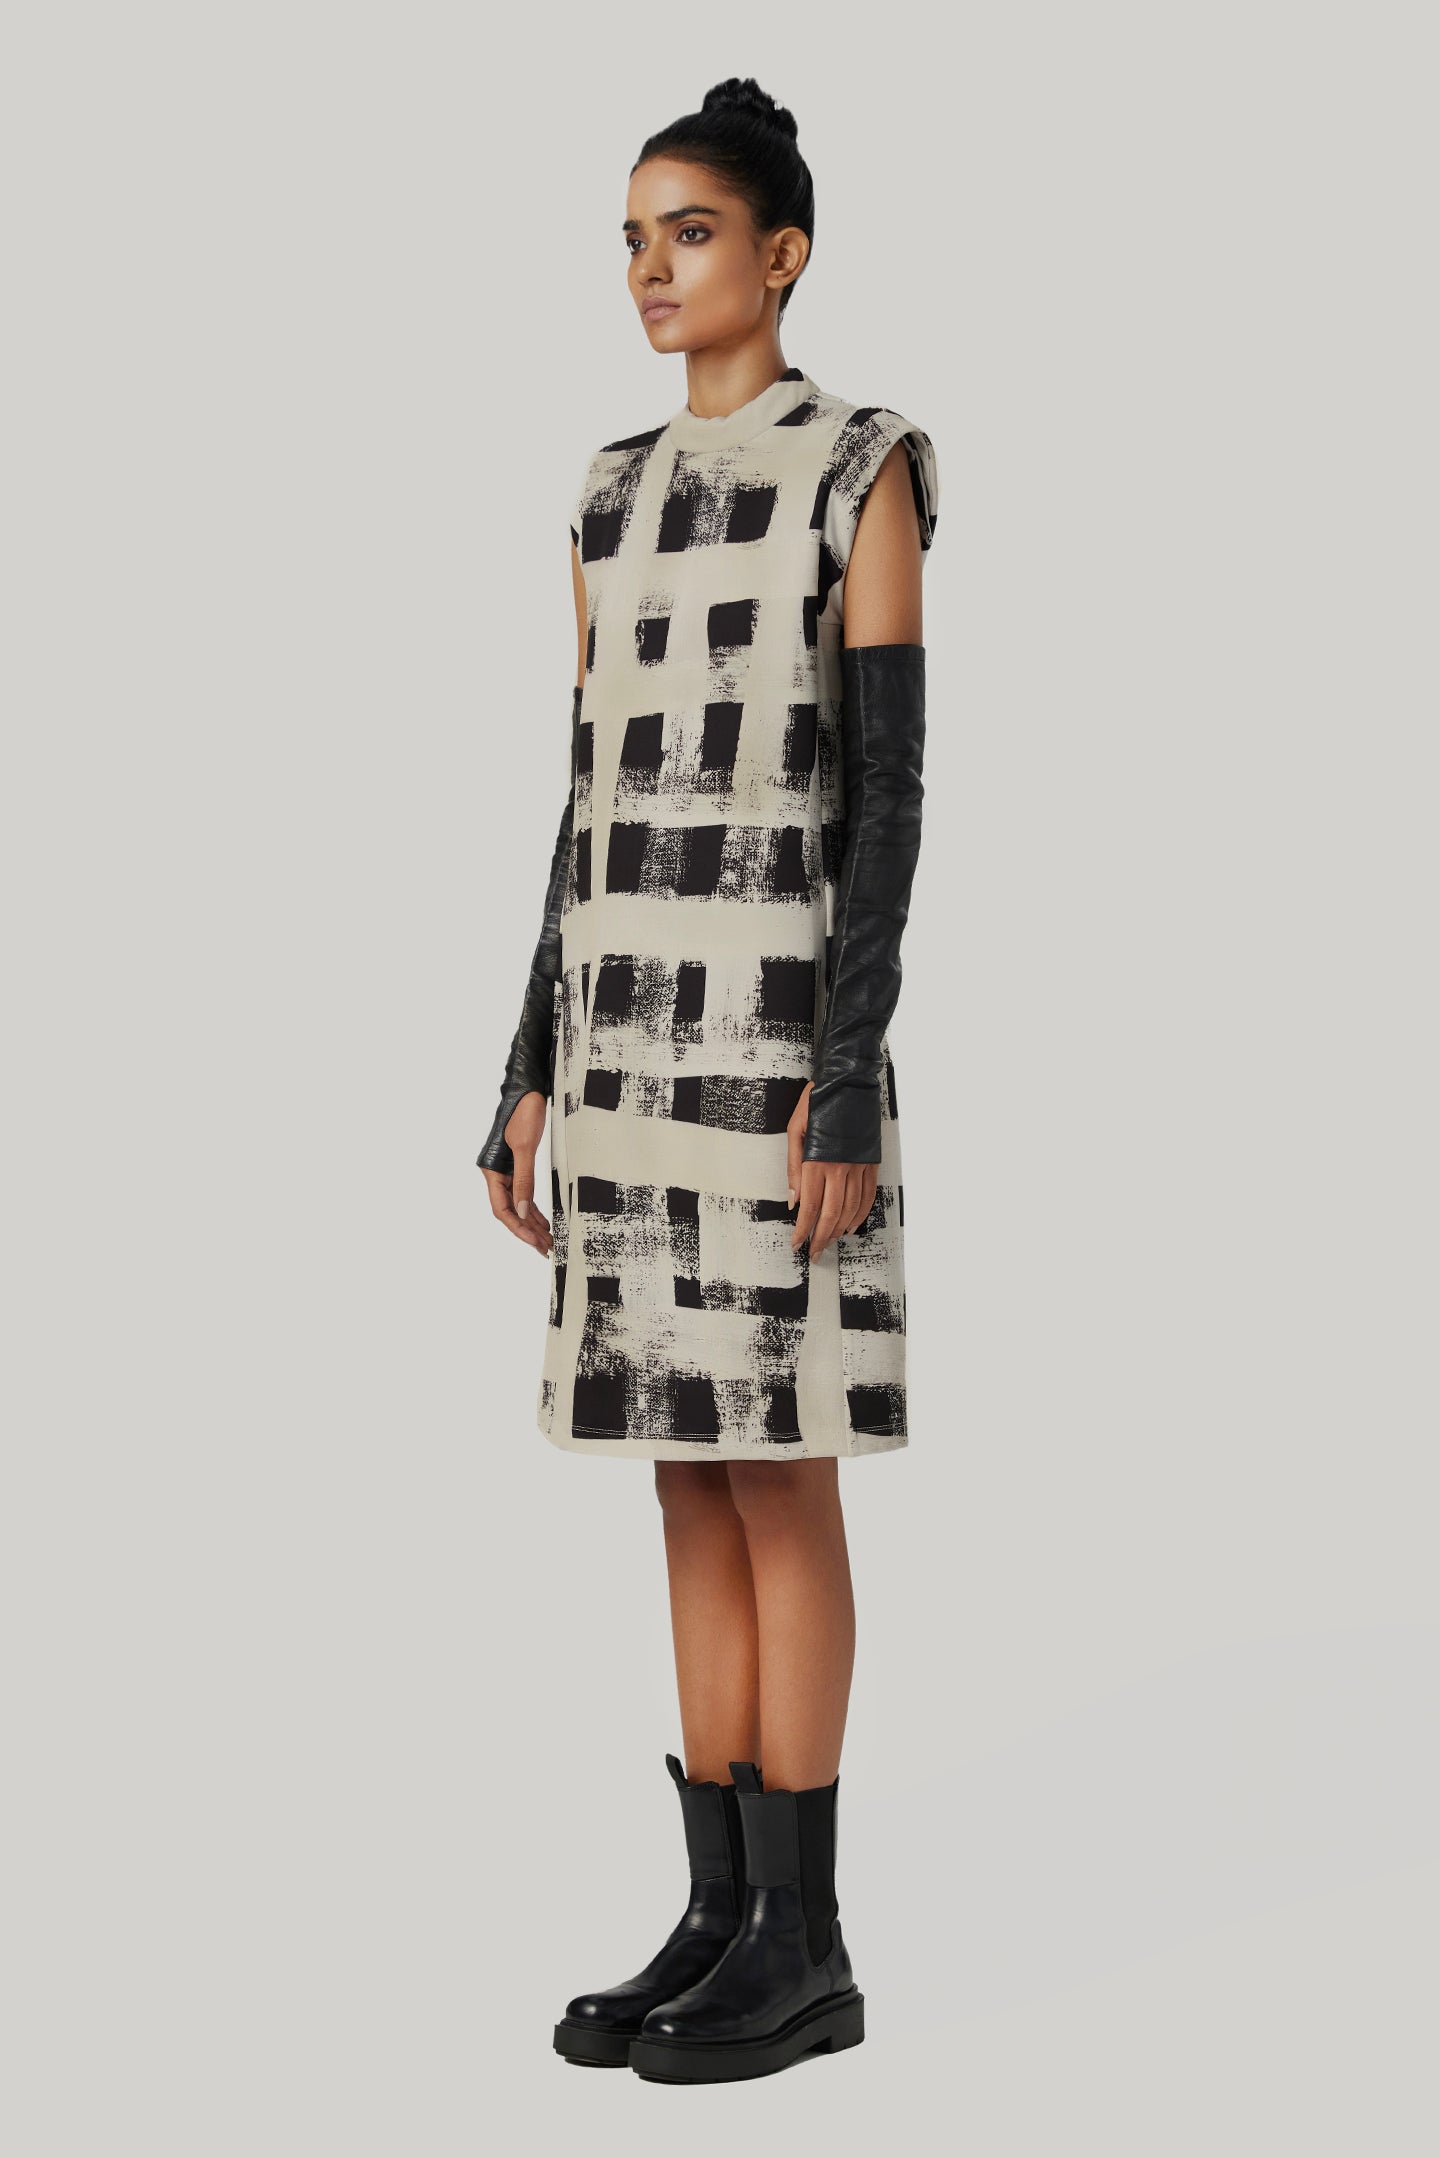 Slim Fit Sleeveless Dress with Eye-catching Large Checks Print